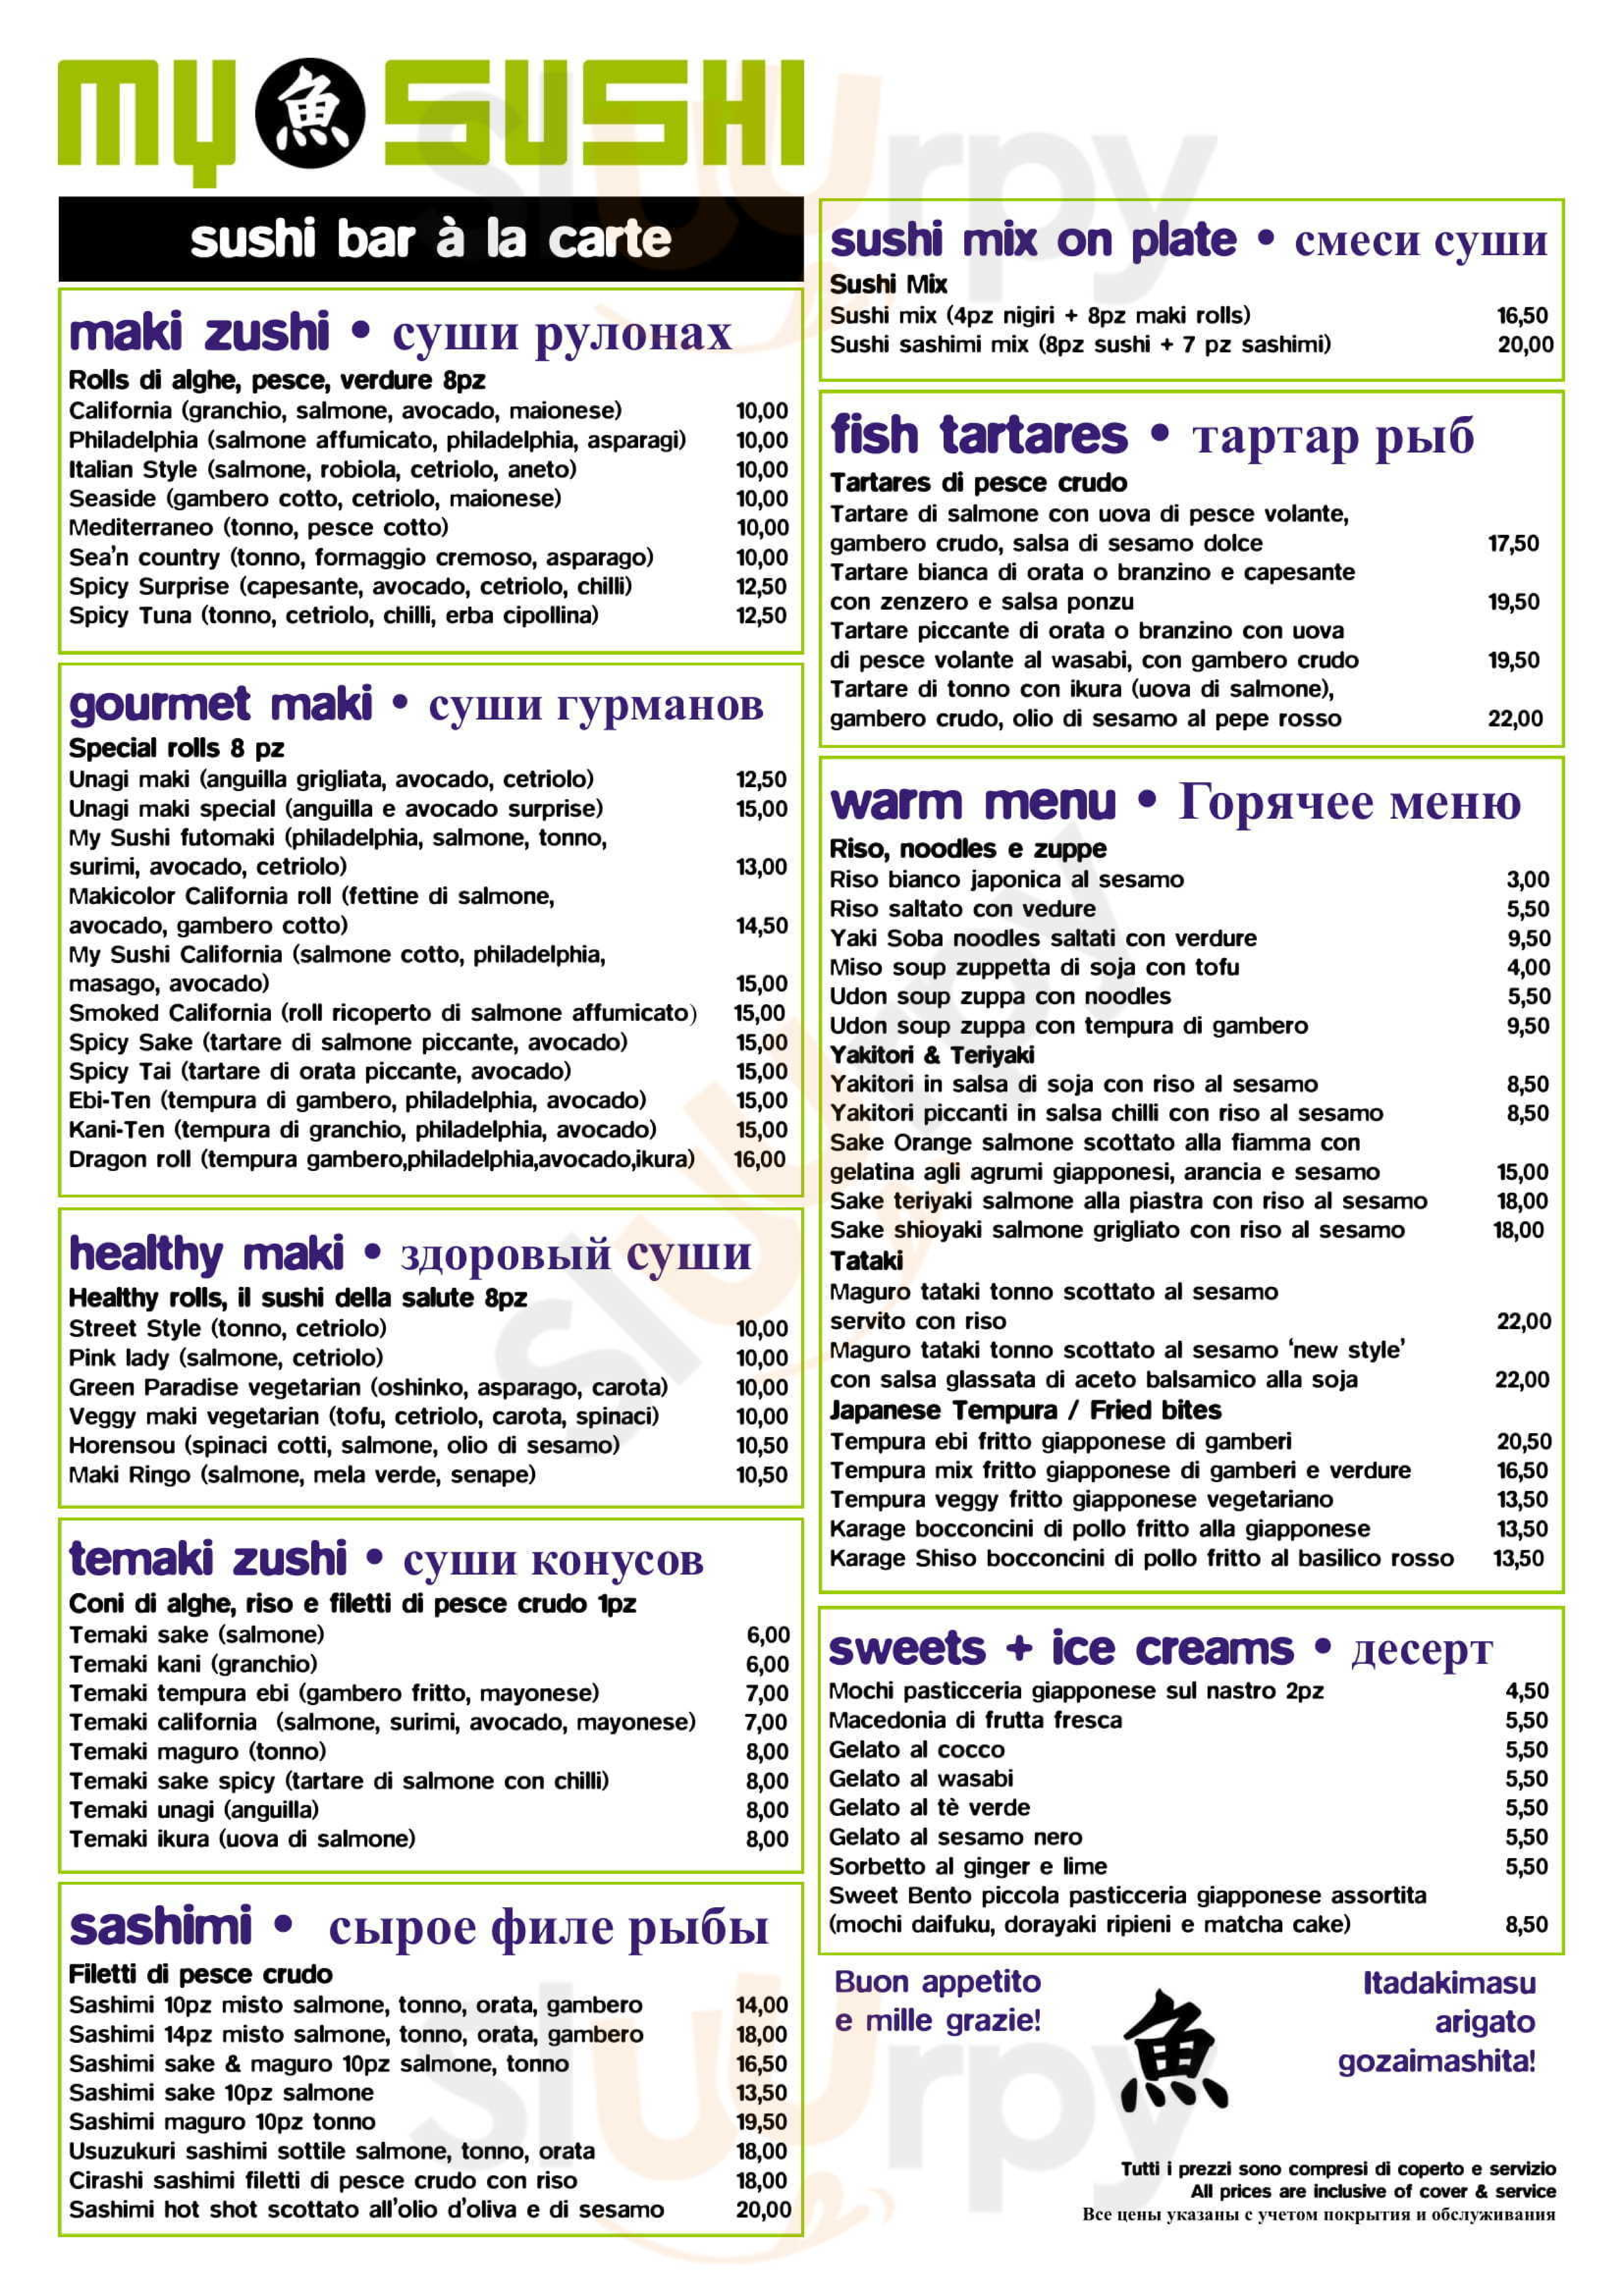 My Sushi - Rinascente Milano menù 1 pagina